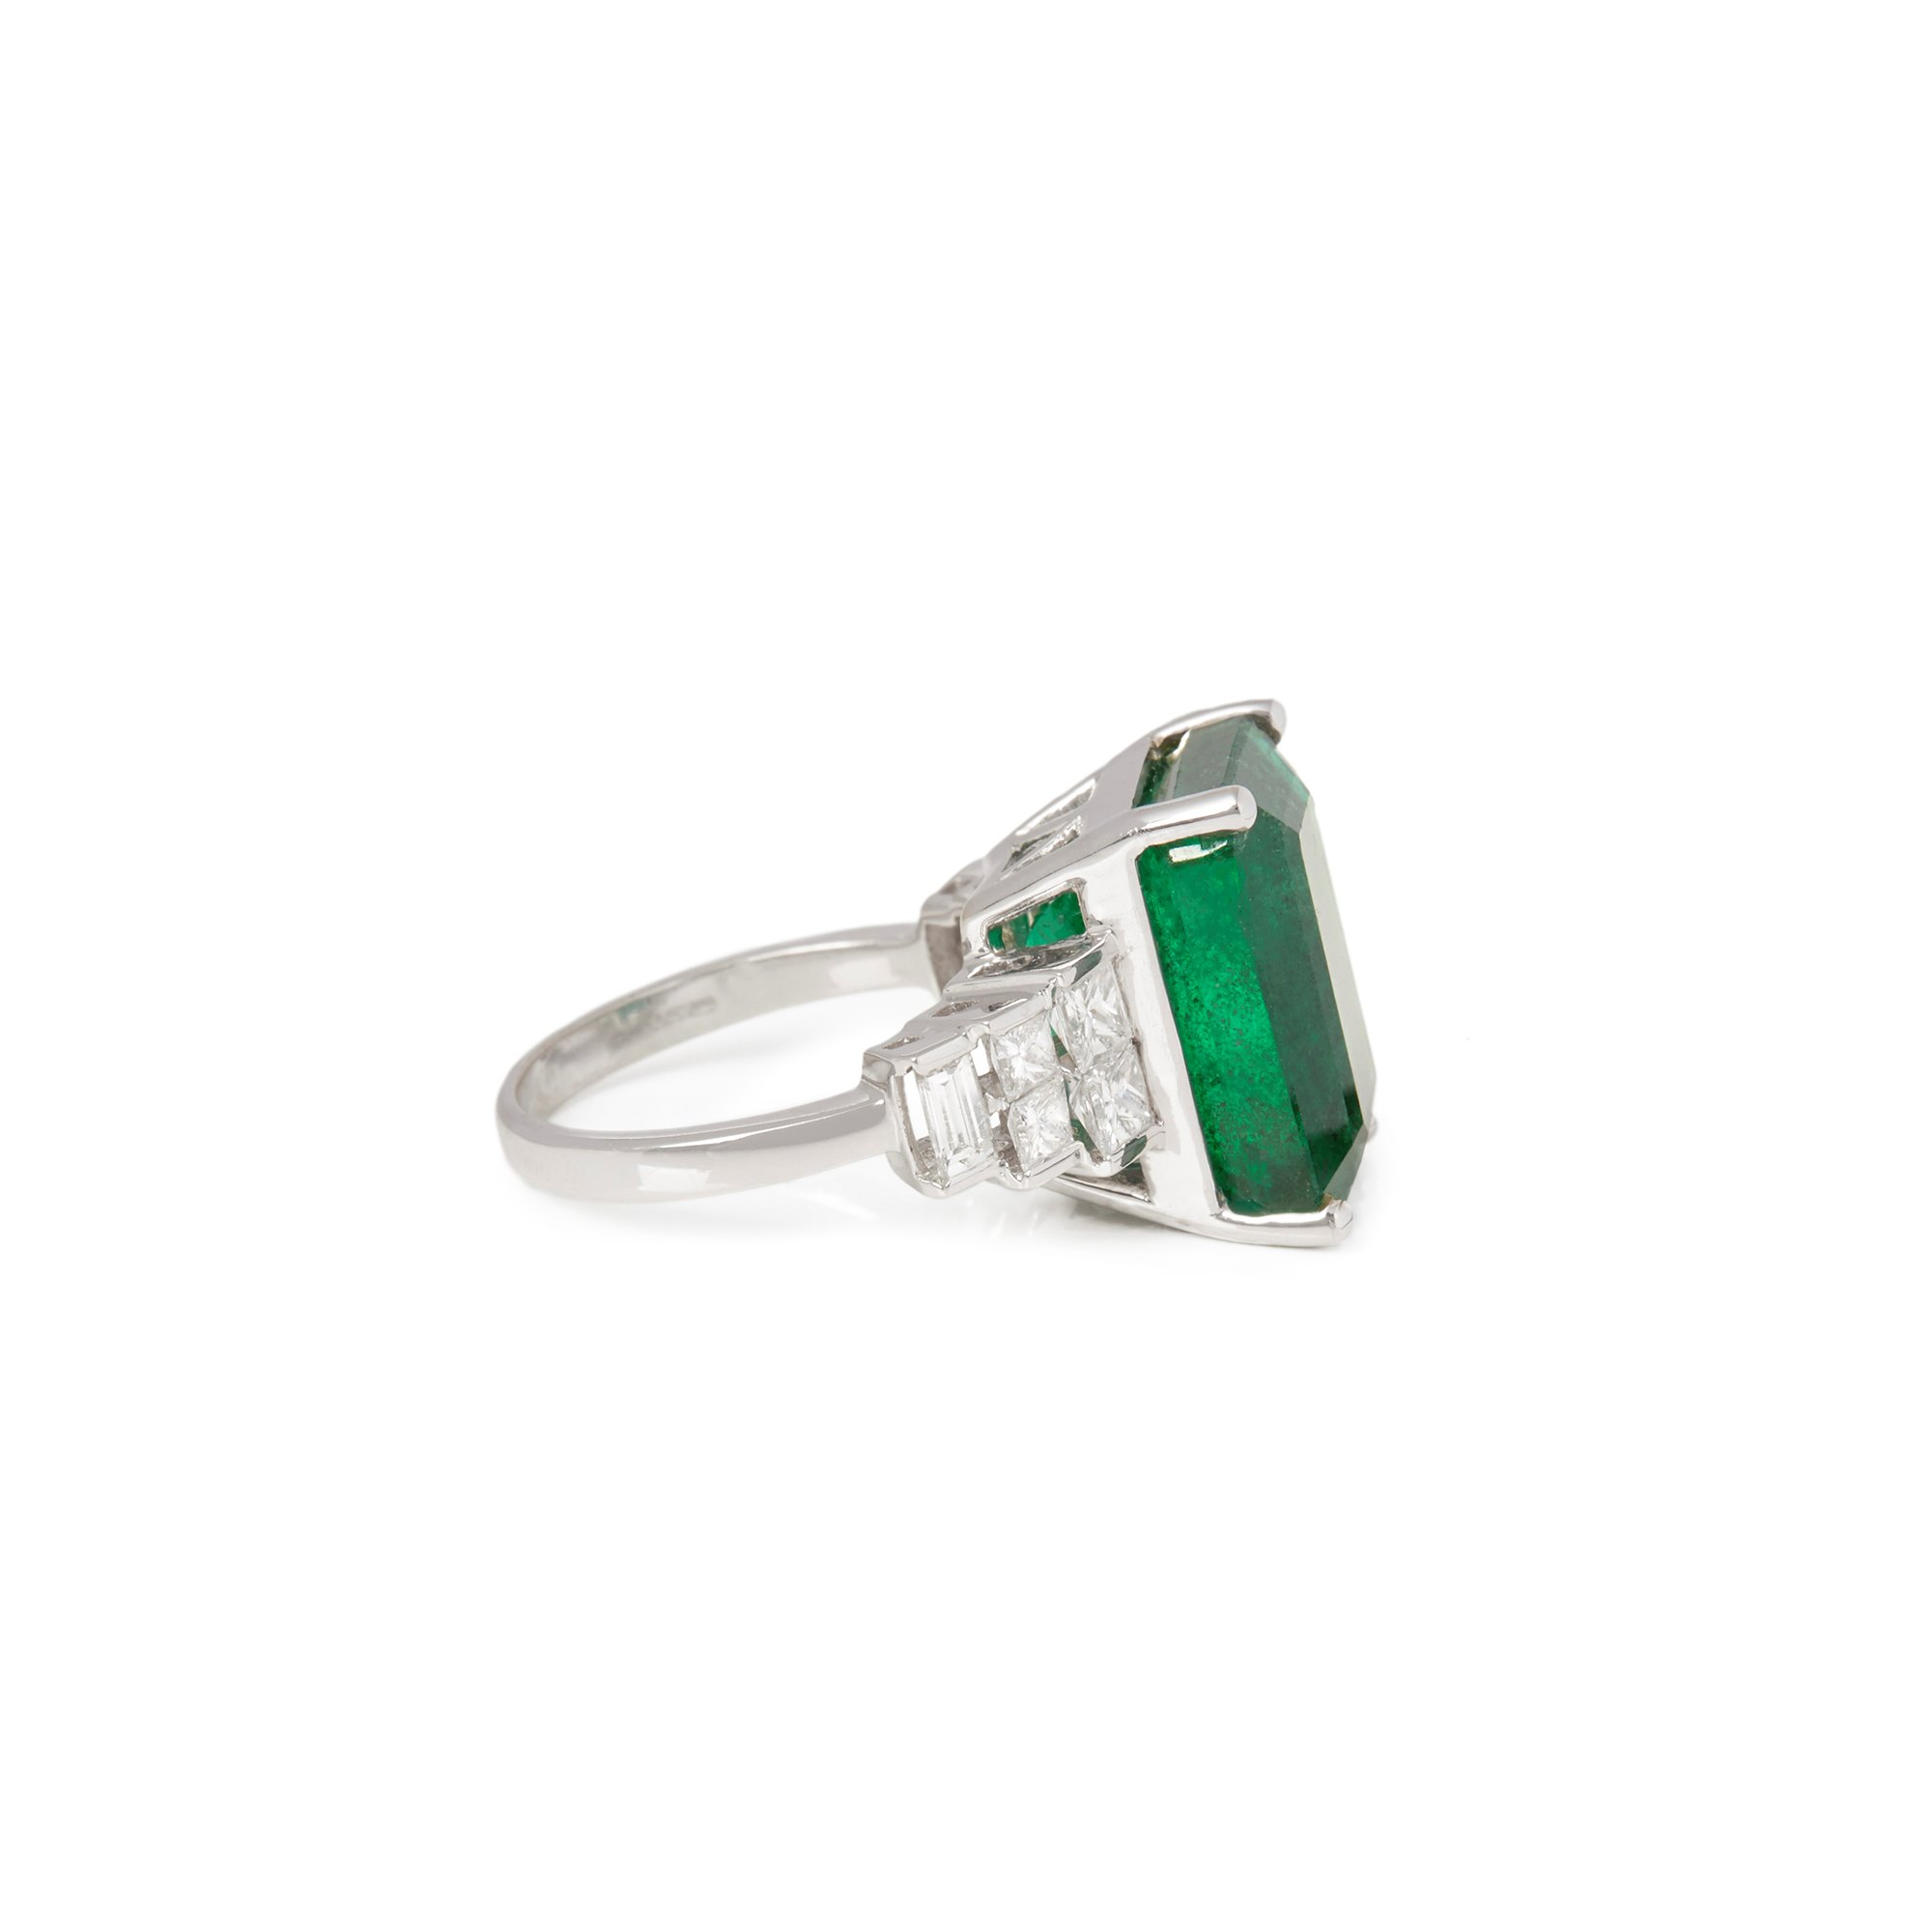 David Jerome Certified 13.77ct Untreated Zambian Emerald Cut Emerald and Diamond 18ct Gold Ring